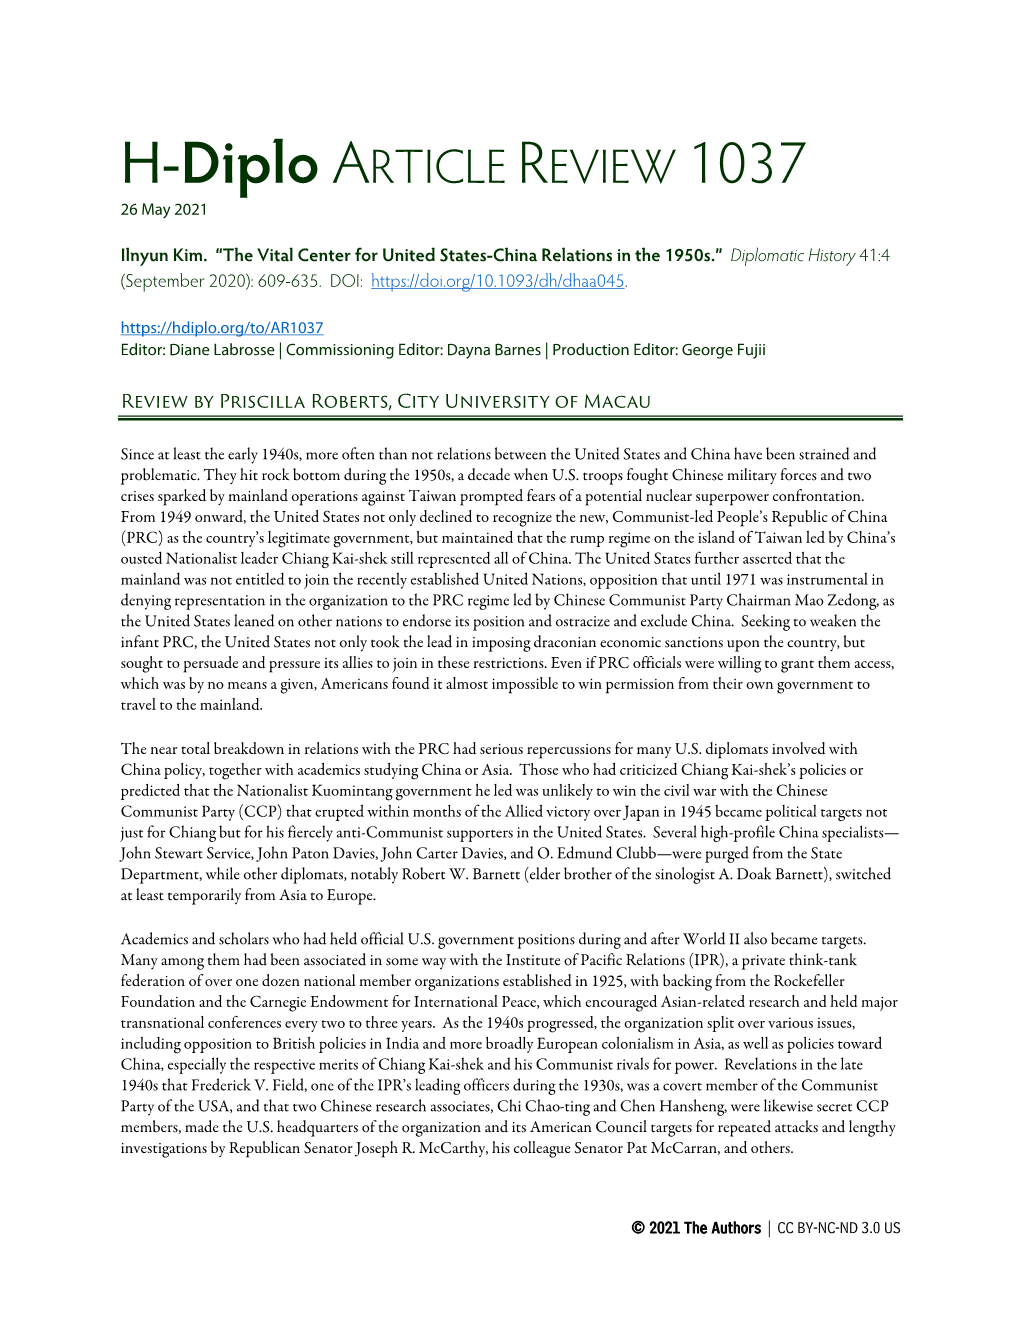 H-Diplo ARTICLE REVIEW 1037 26 May 2021